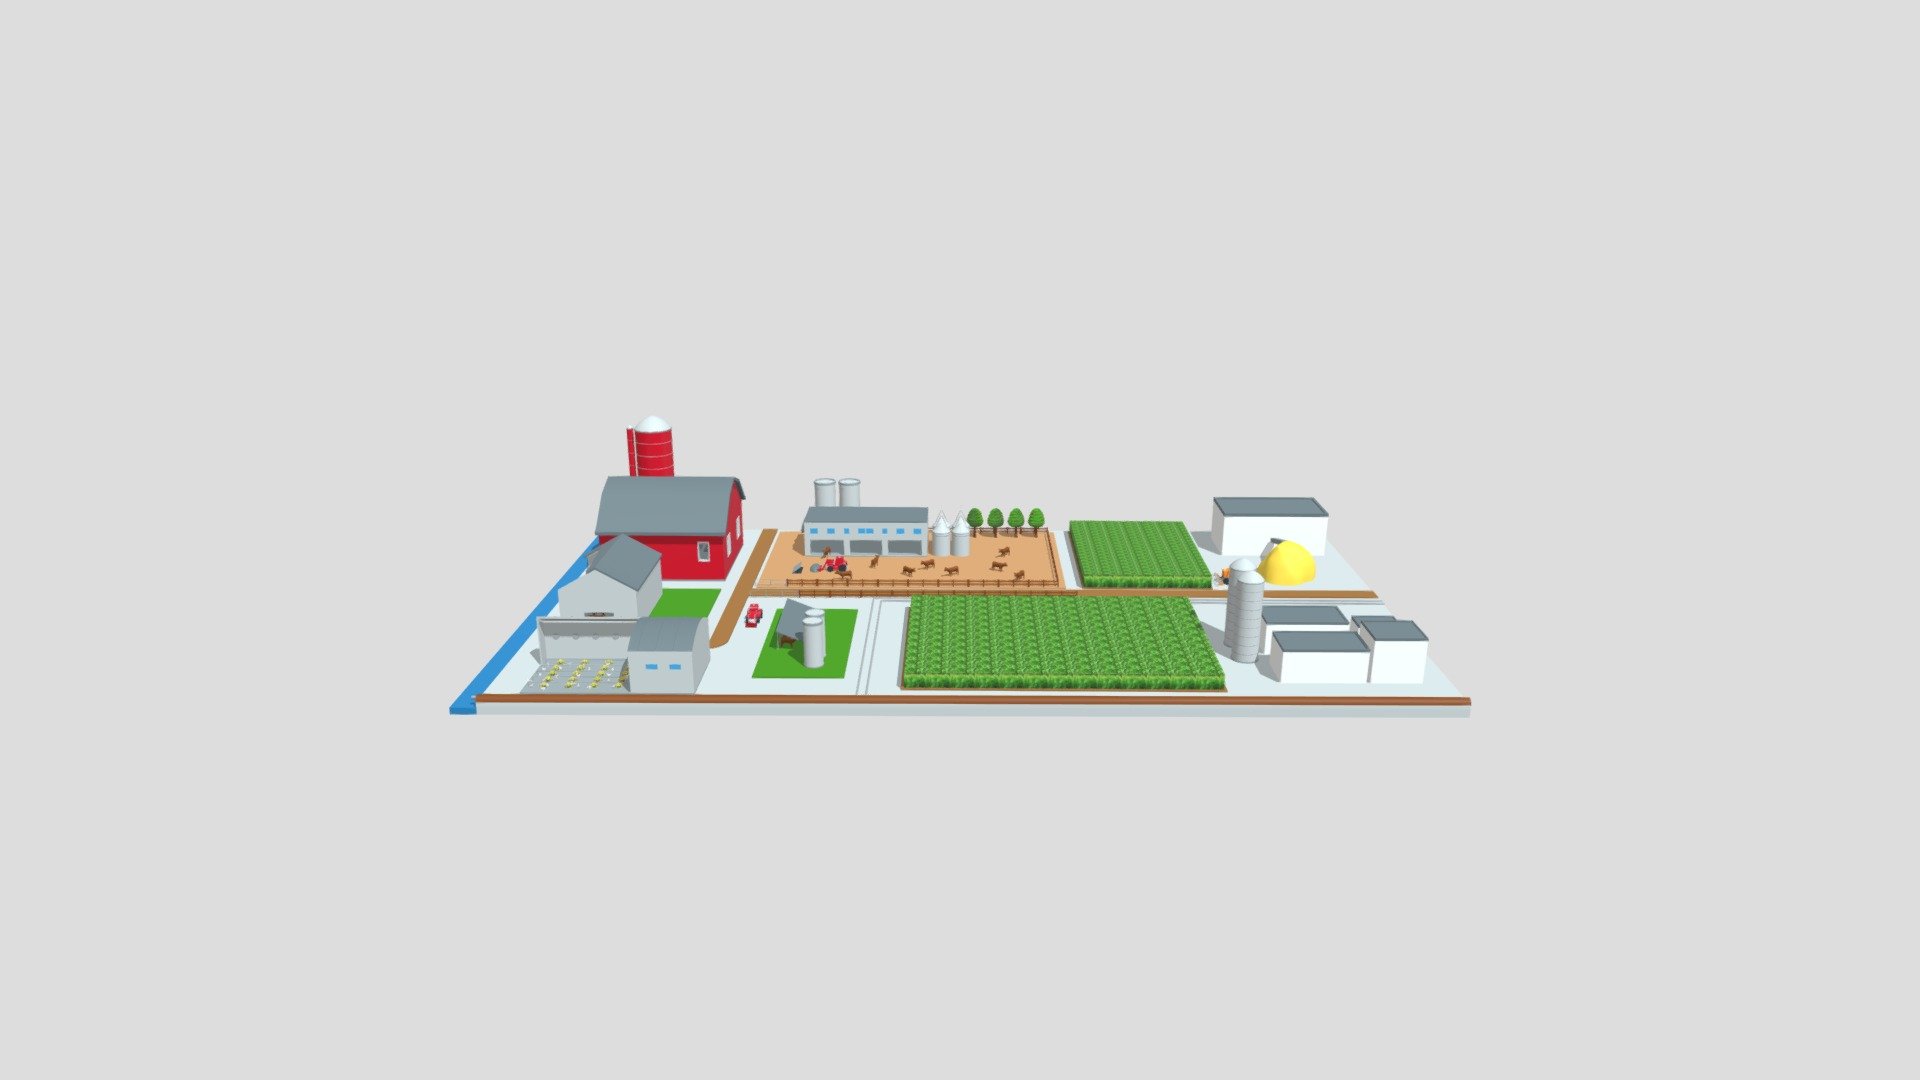 16 Agriculture V5 - 3D model by jlundy [cb3d4fc] - Sketchfab